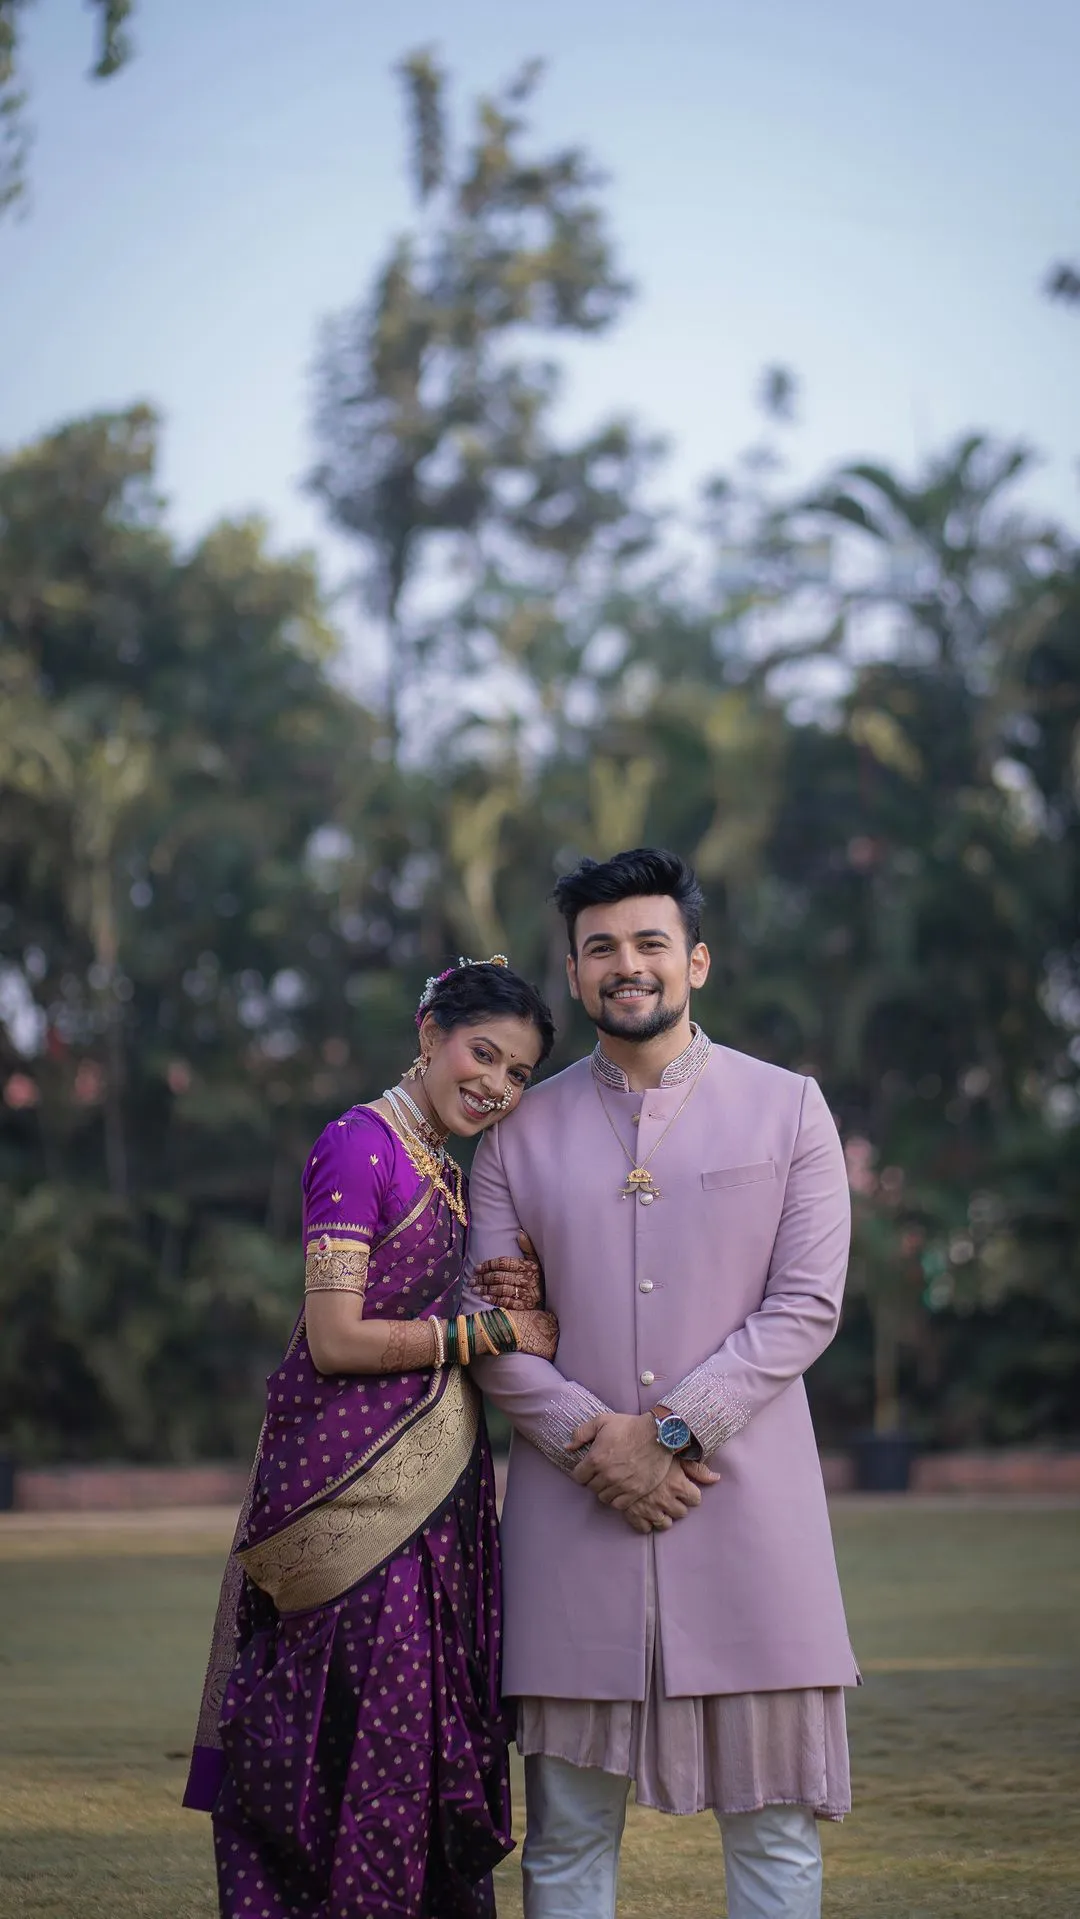 Dhruva Datar Akshata Tikhe Wedding Photos